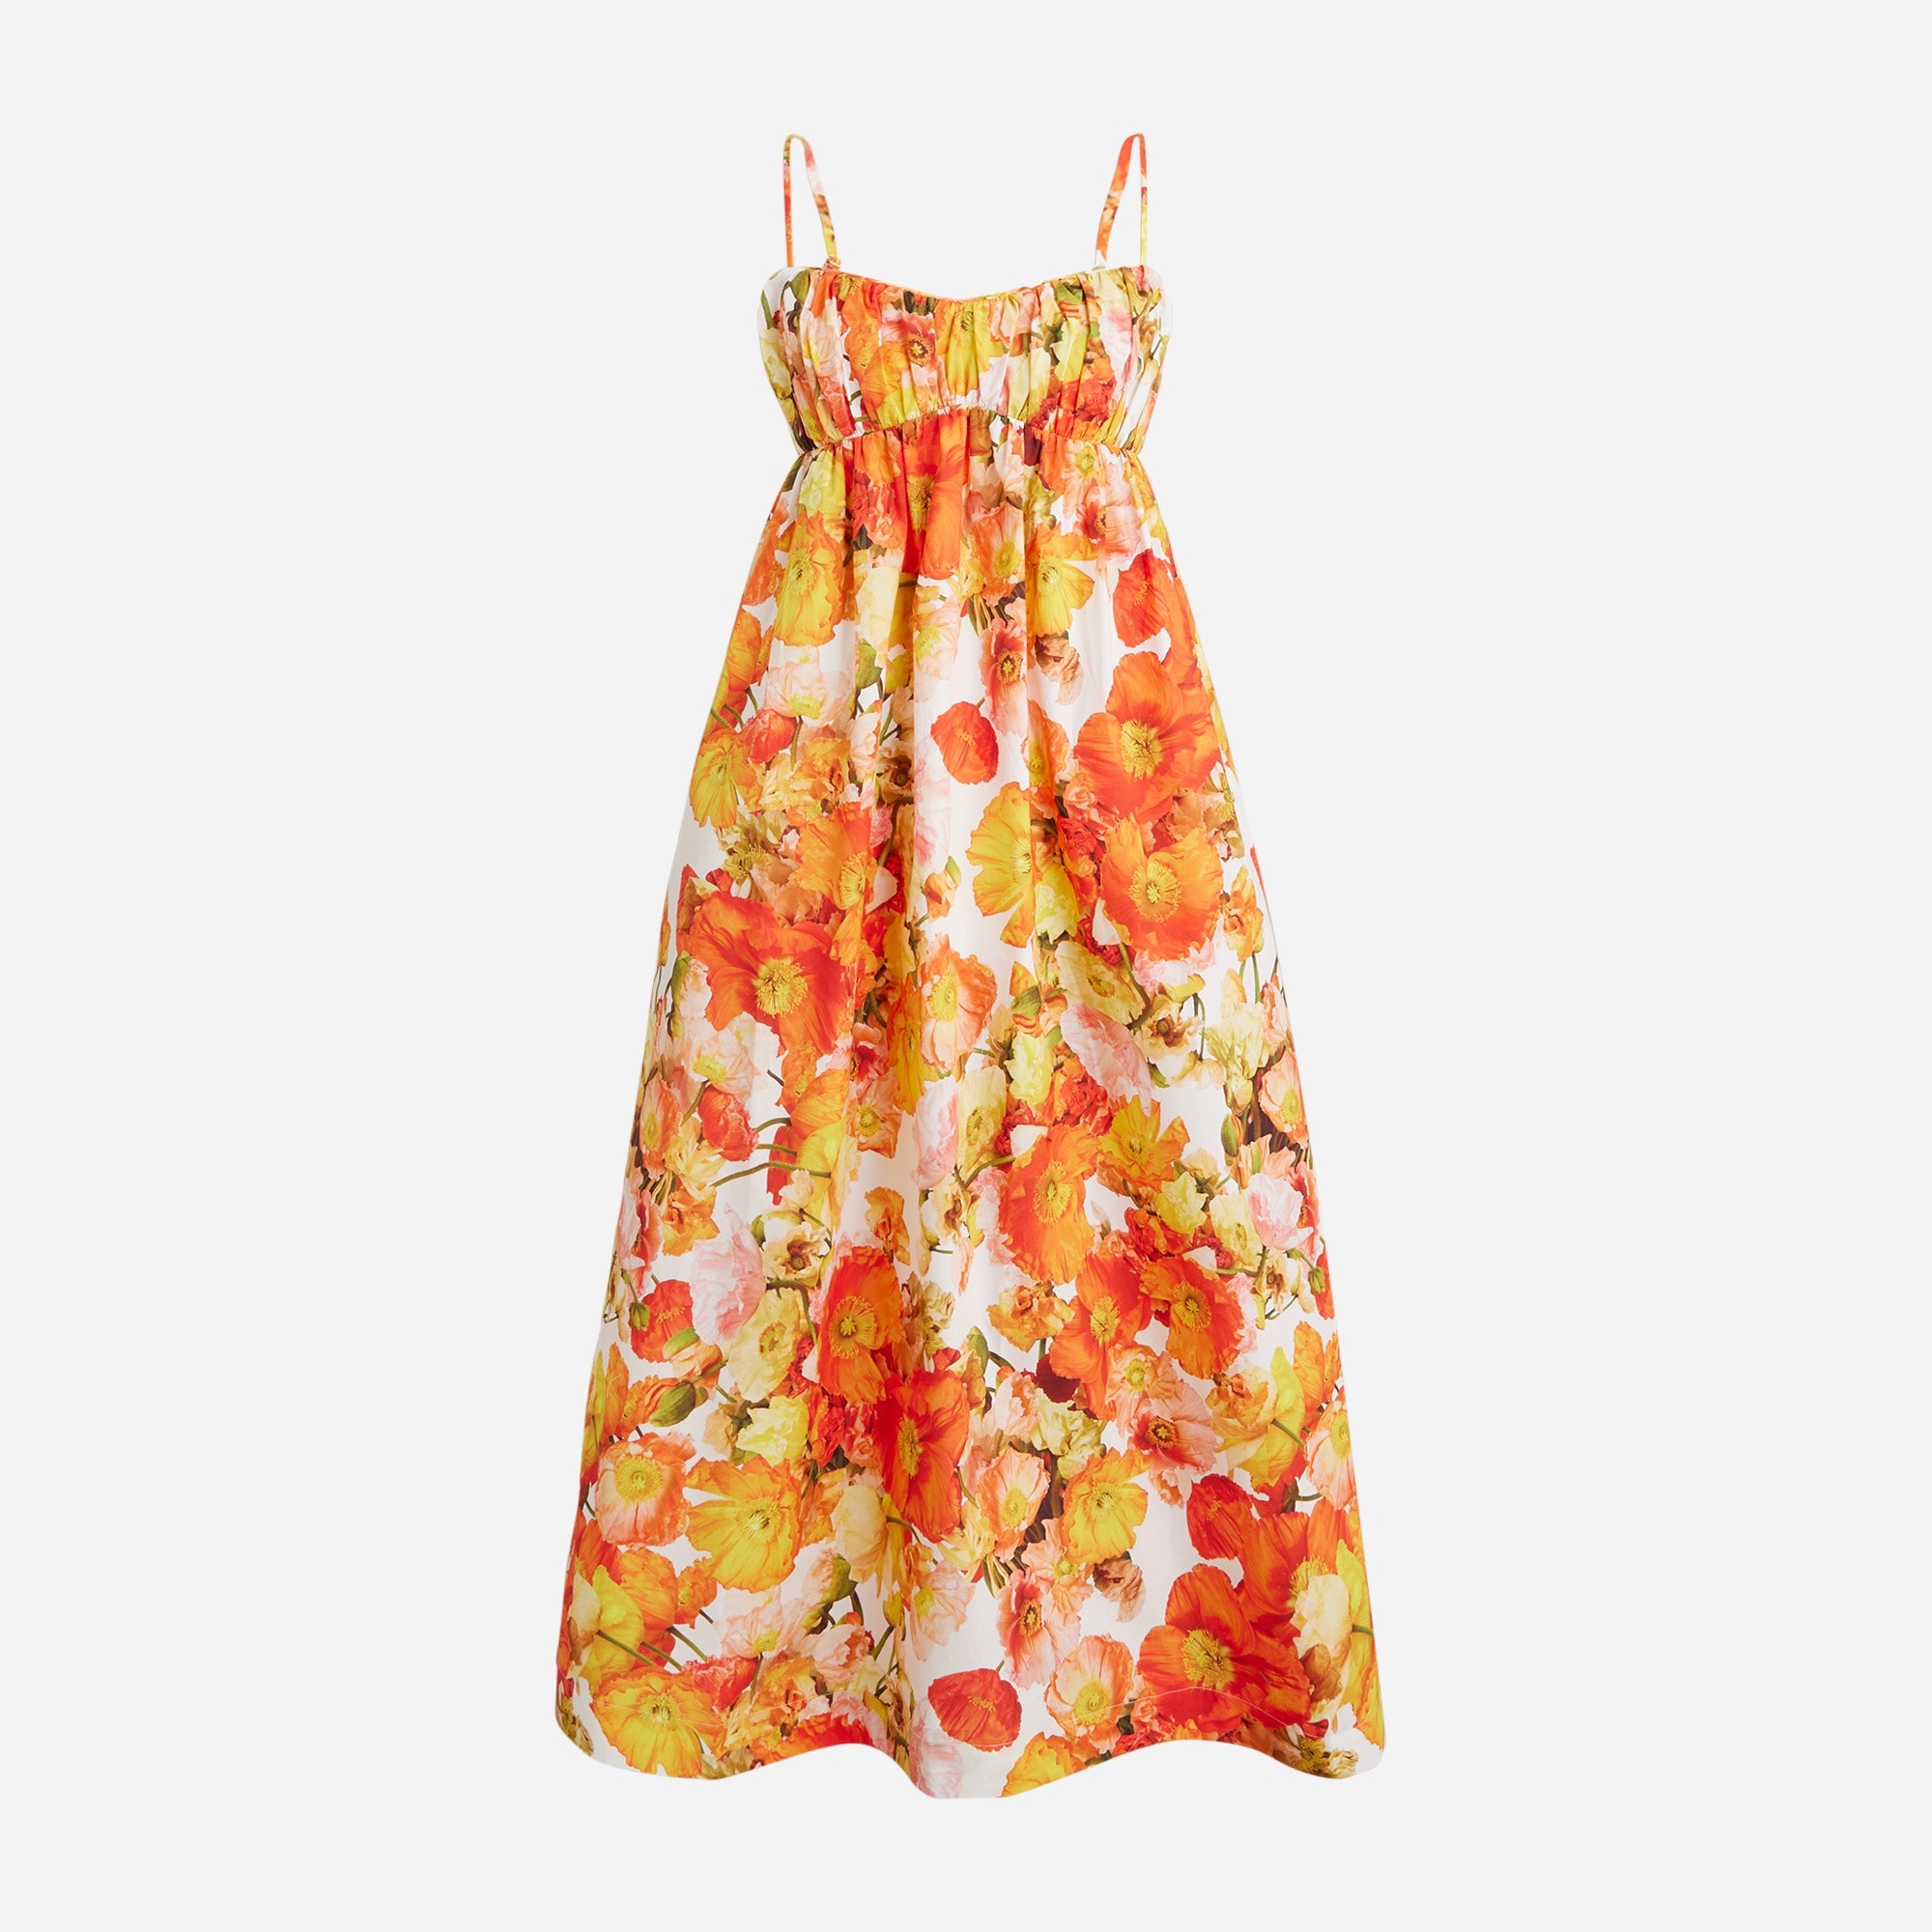  Empire-waist midi dress in floral cotton poplin